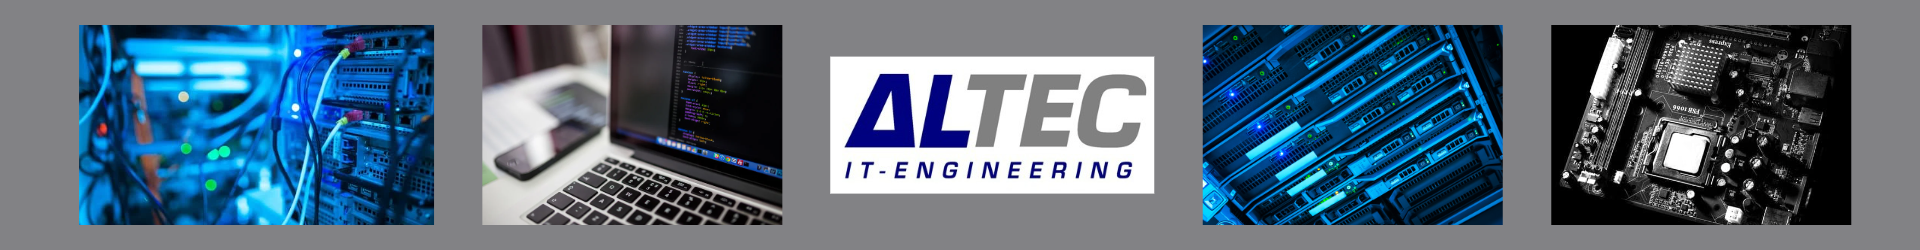 ALTEC IT-Engineering